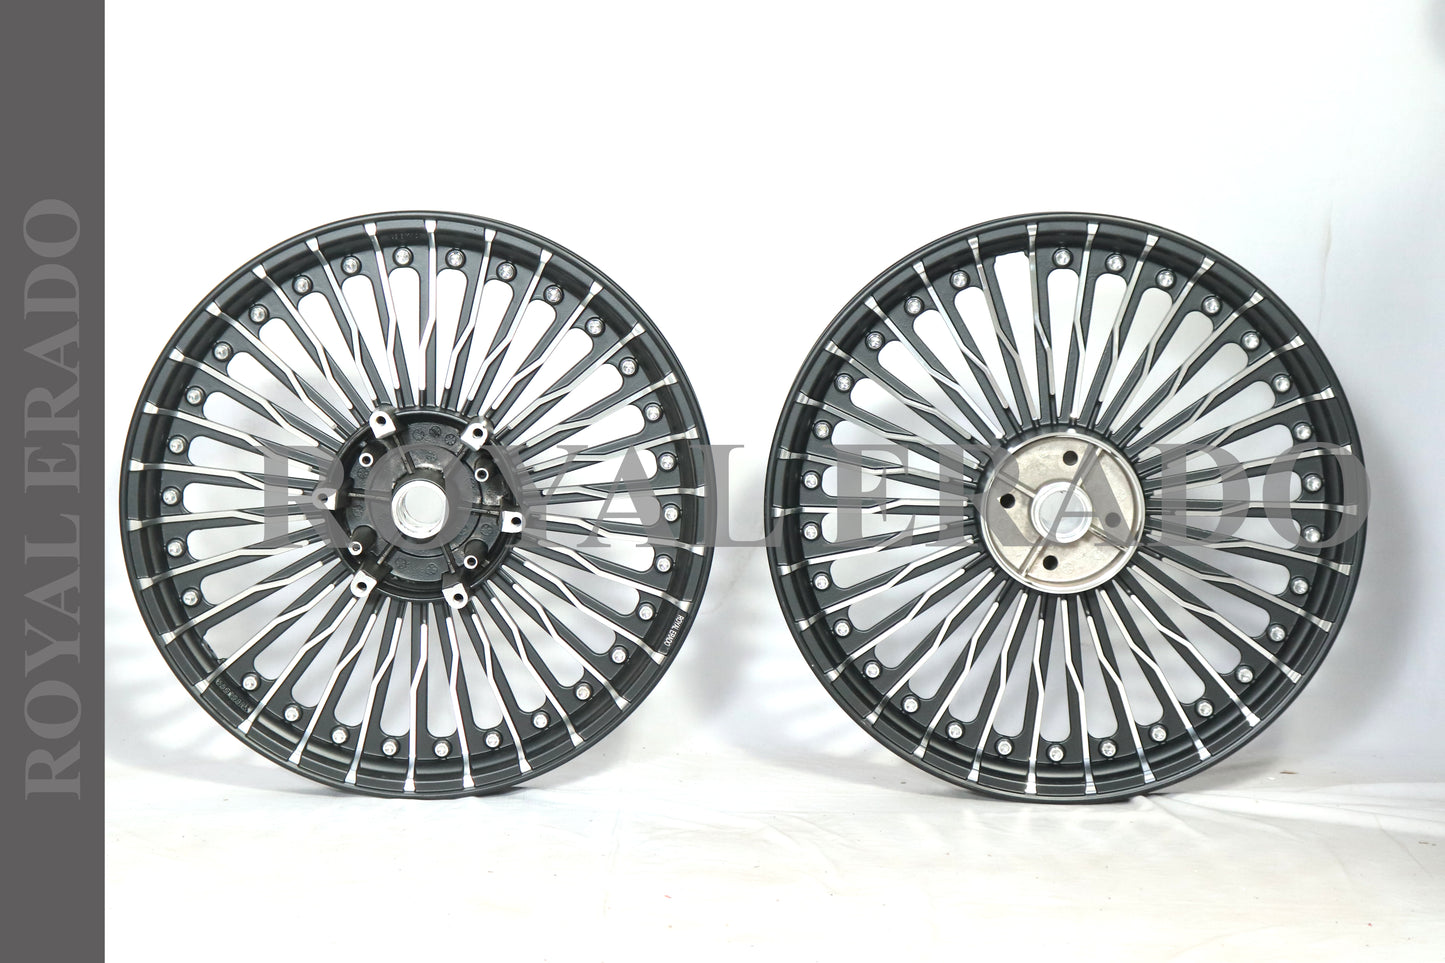 30 Spokes Alloy Wheel for STANDARD ABS Royal-Enfield Bullet X 350CC, Electra, Thunderbird 2010 model